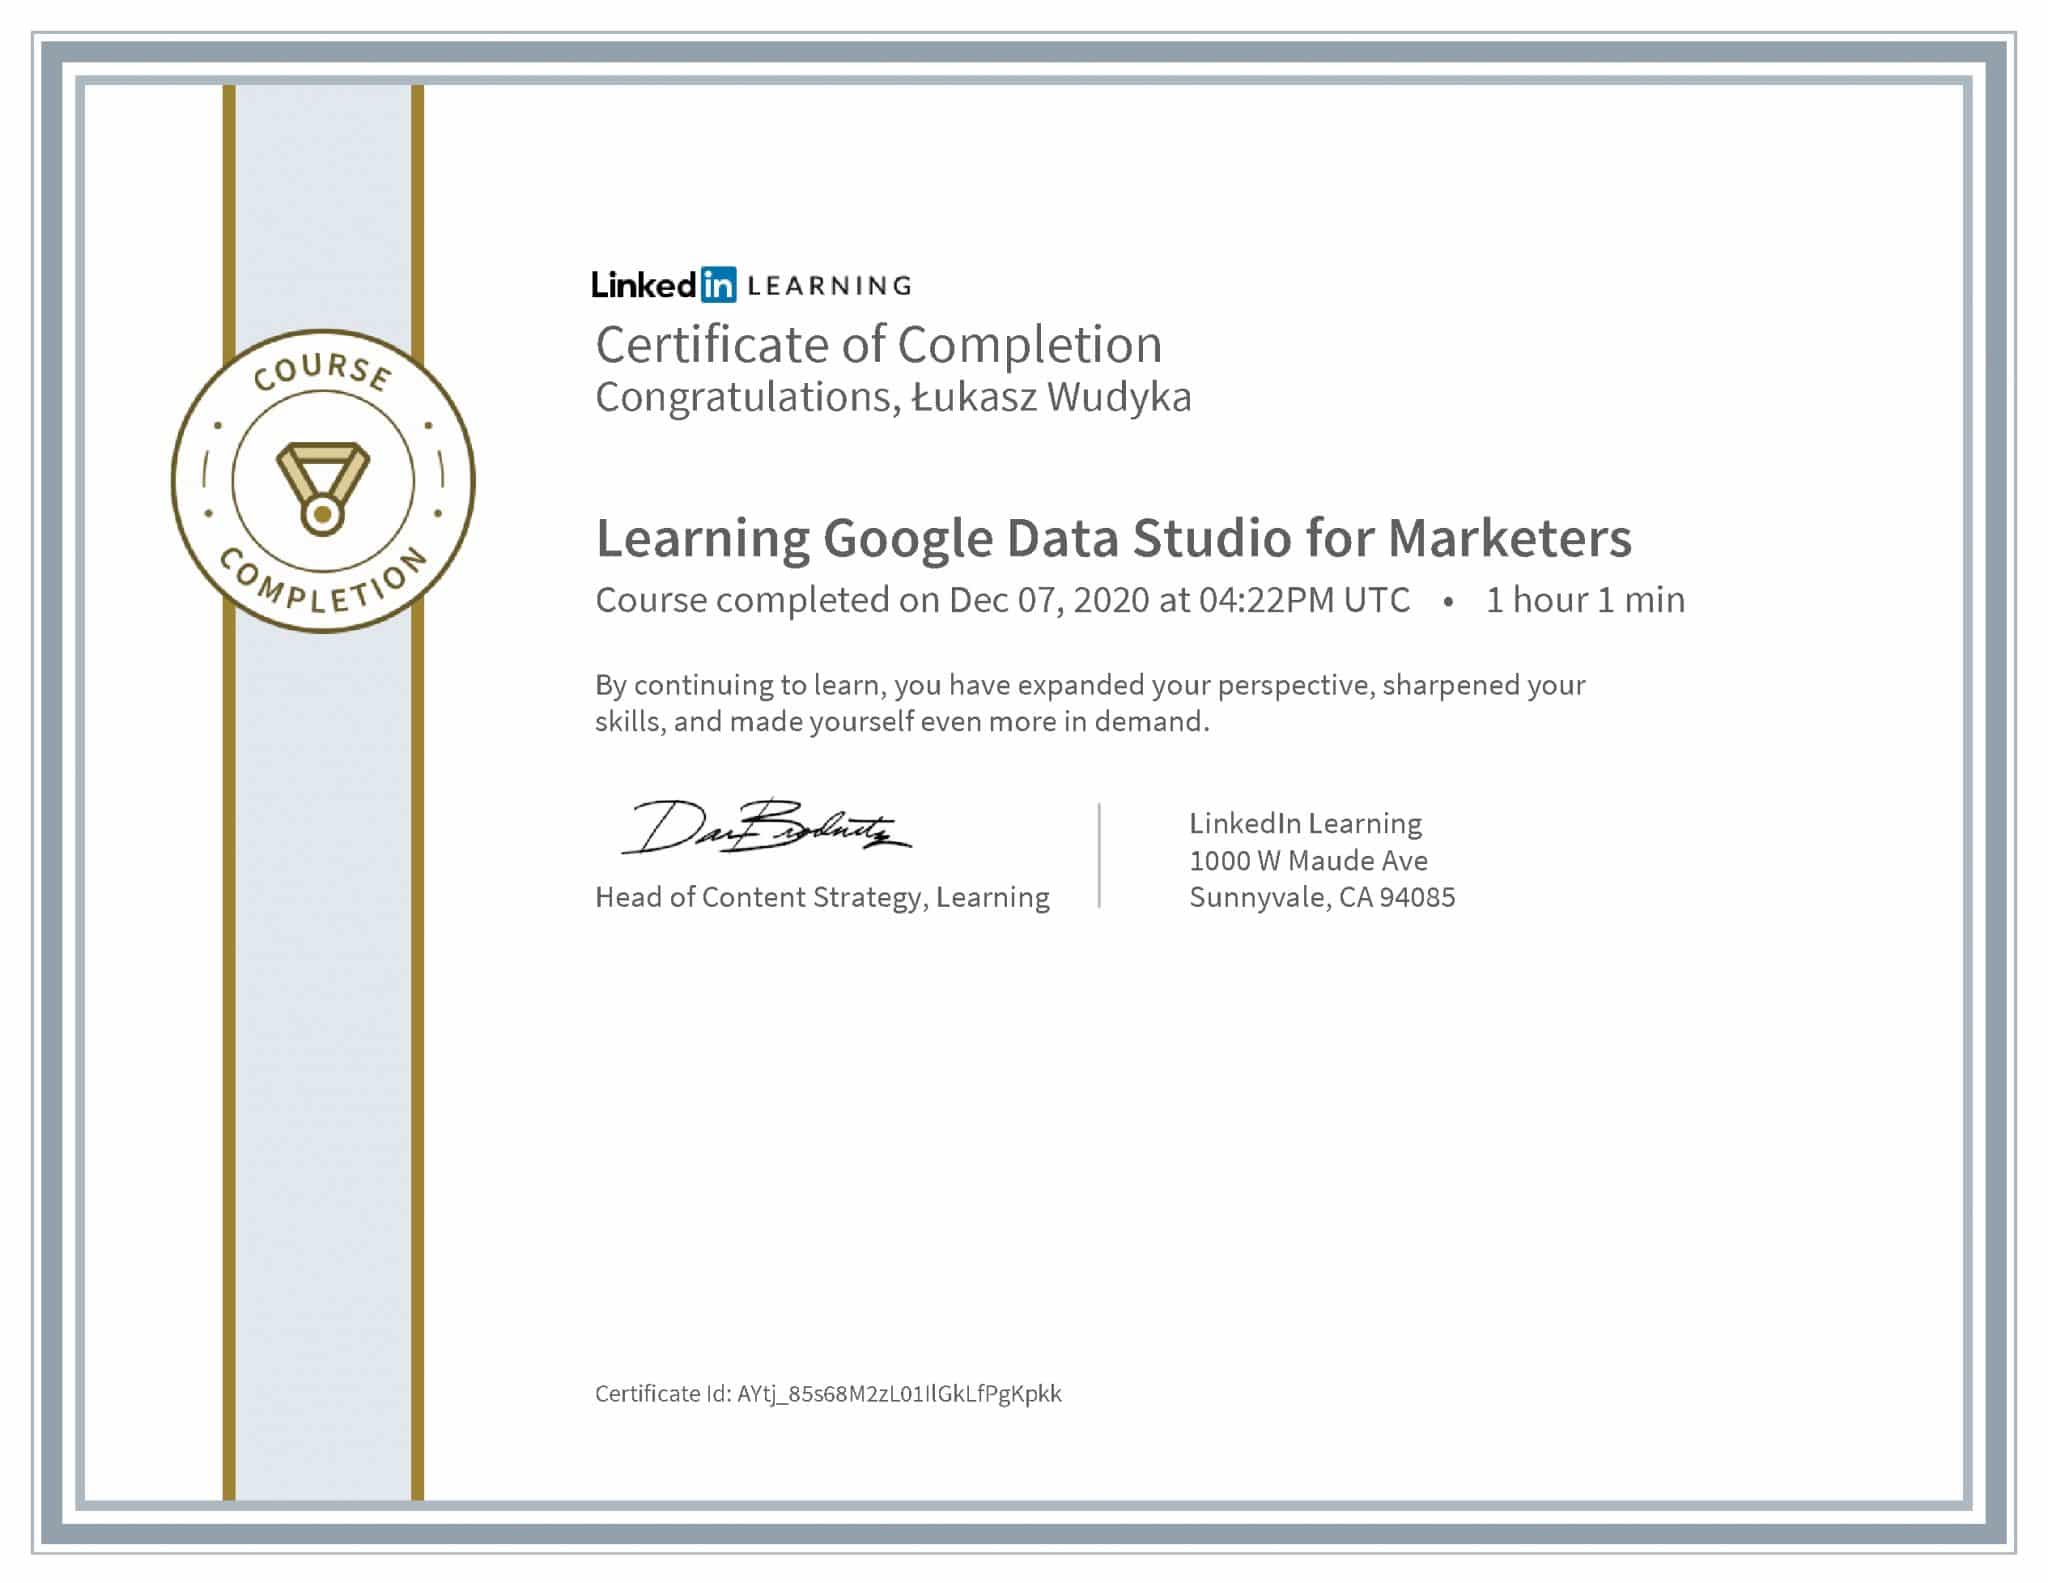 Łukasz Wudyka certyfikat LinkedIn Learning Google Data Studio for Marketers